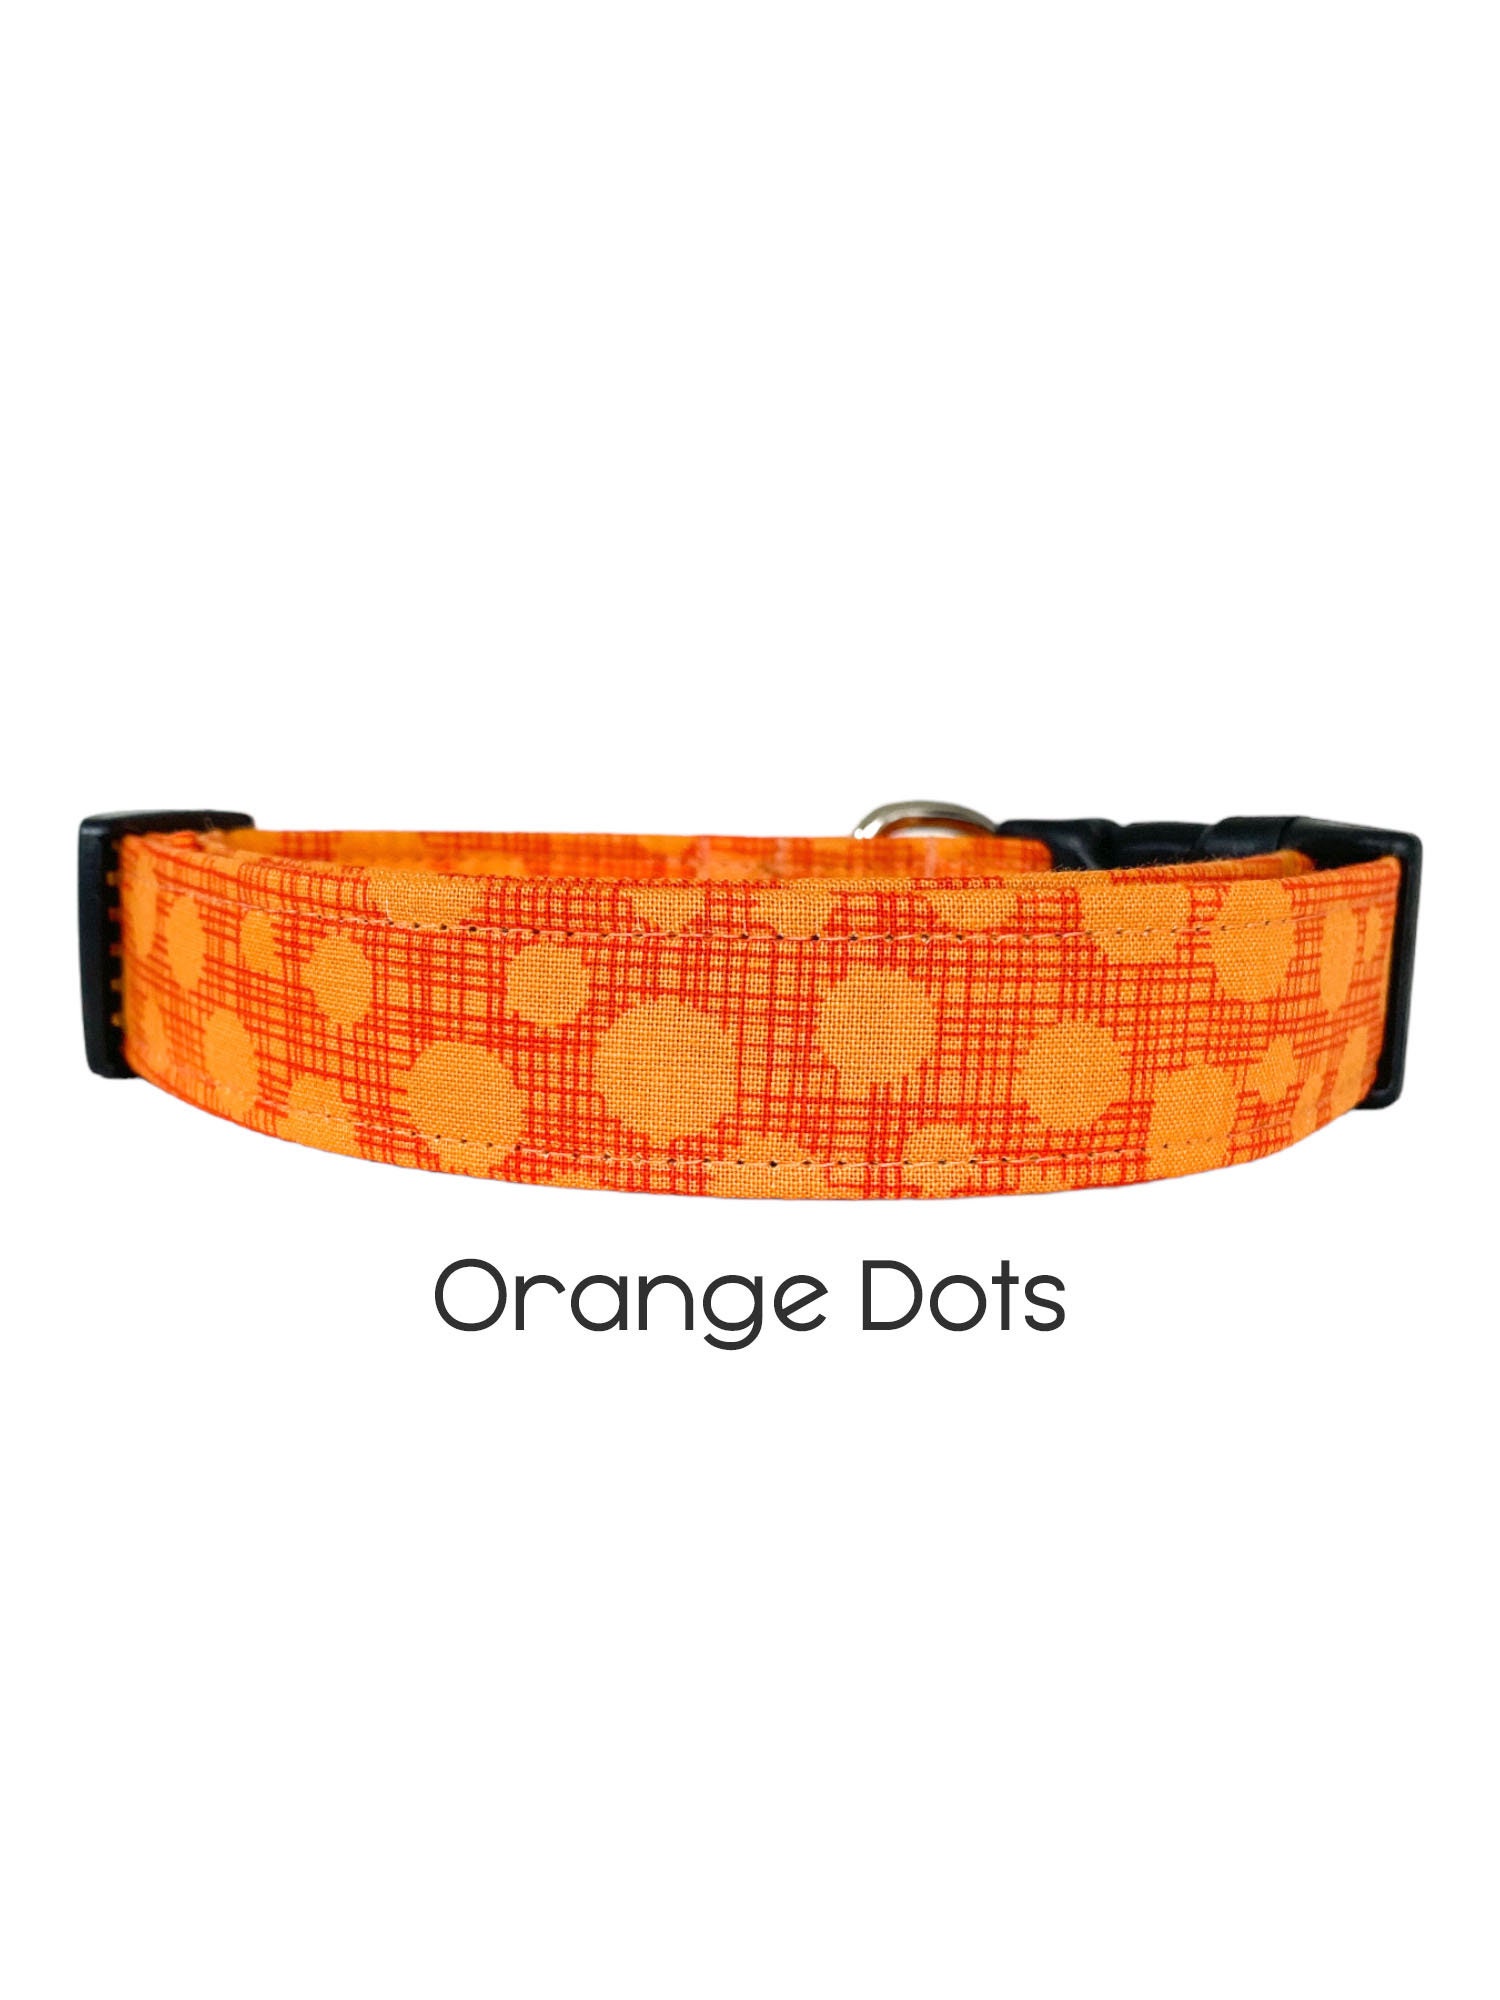 Orange Striped Candy Adjustable Dog Collar Girl Boy Spring 